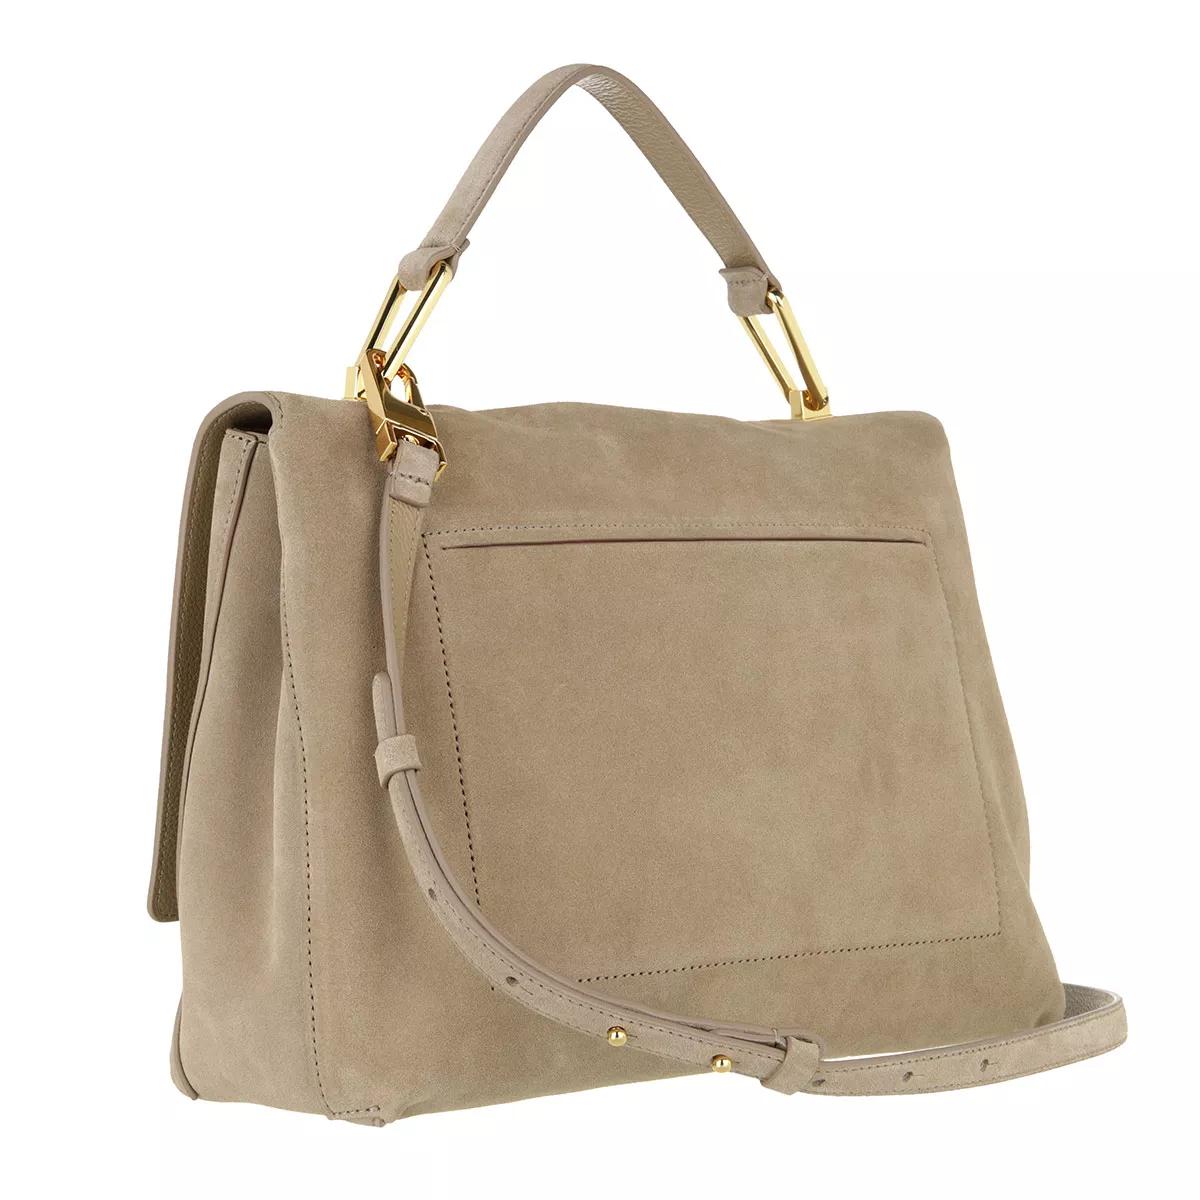 Coccinelle Satchels Handbag Suede Leather in beige